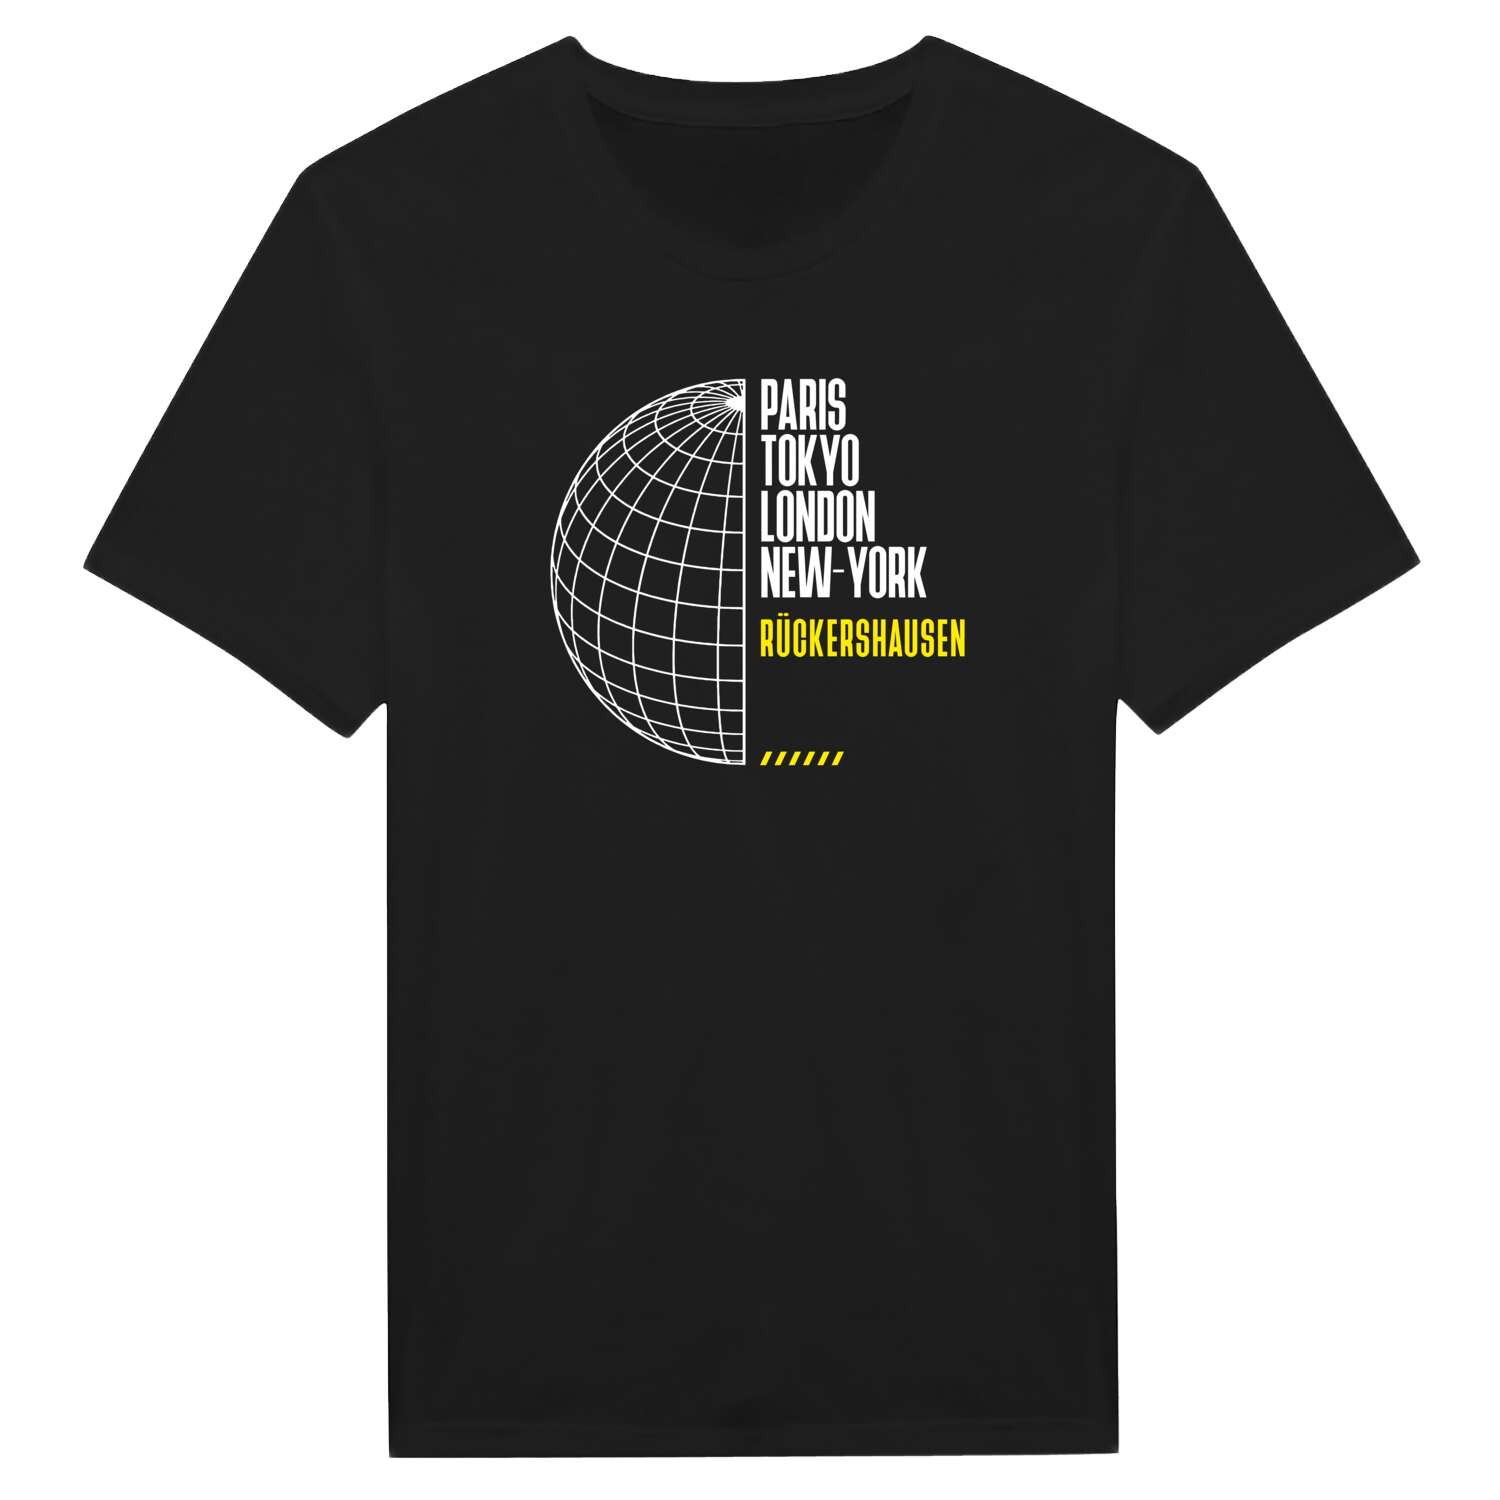 Rückershausen T-Shirt »Paris Tokyo London«